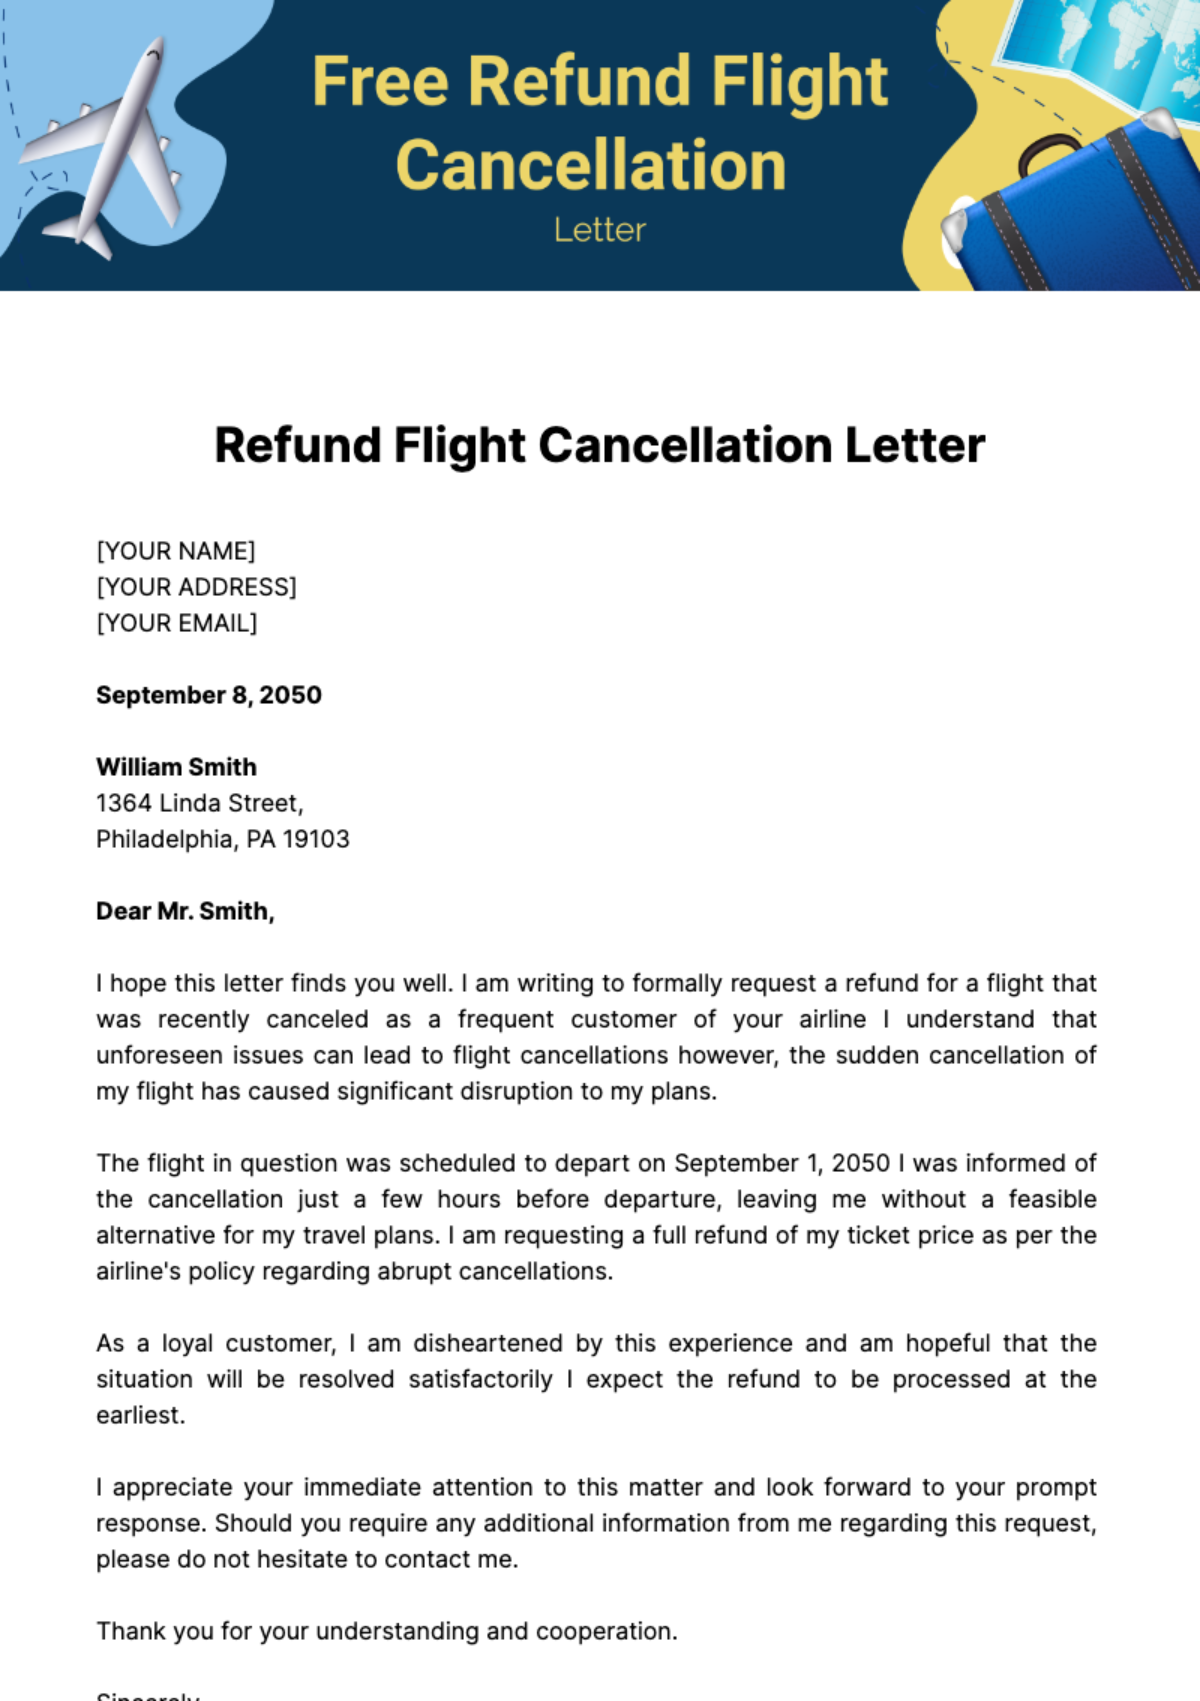 Free Refund Flight Cancellation Letter Template